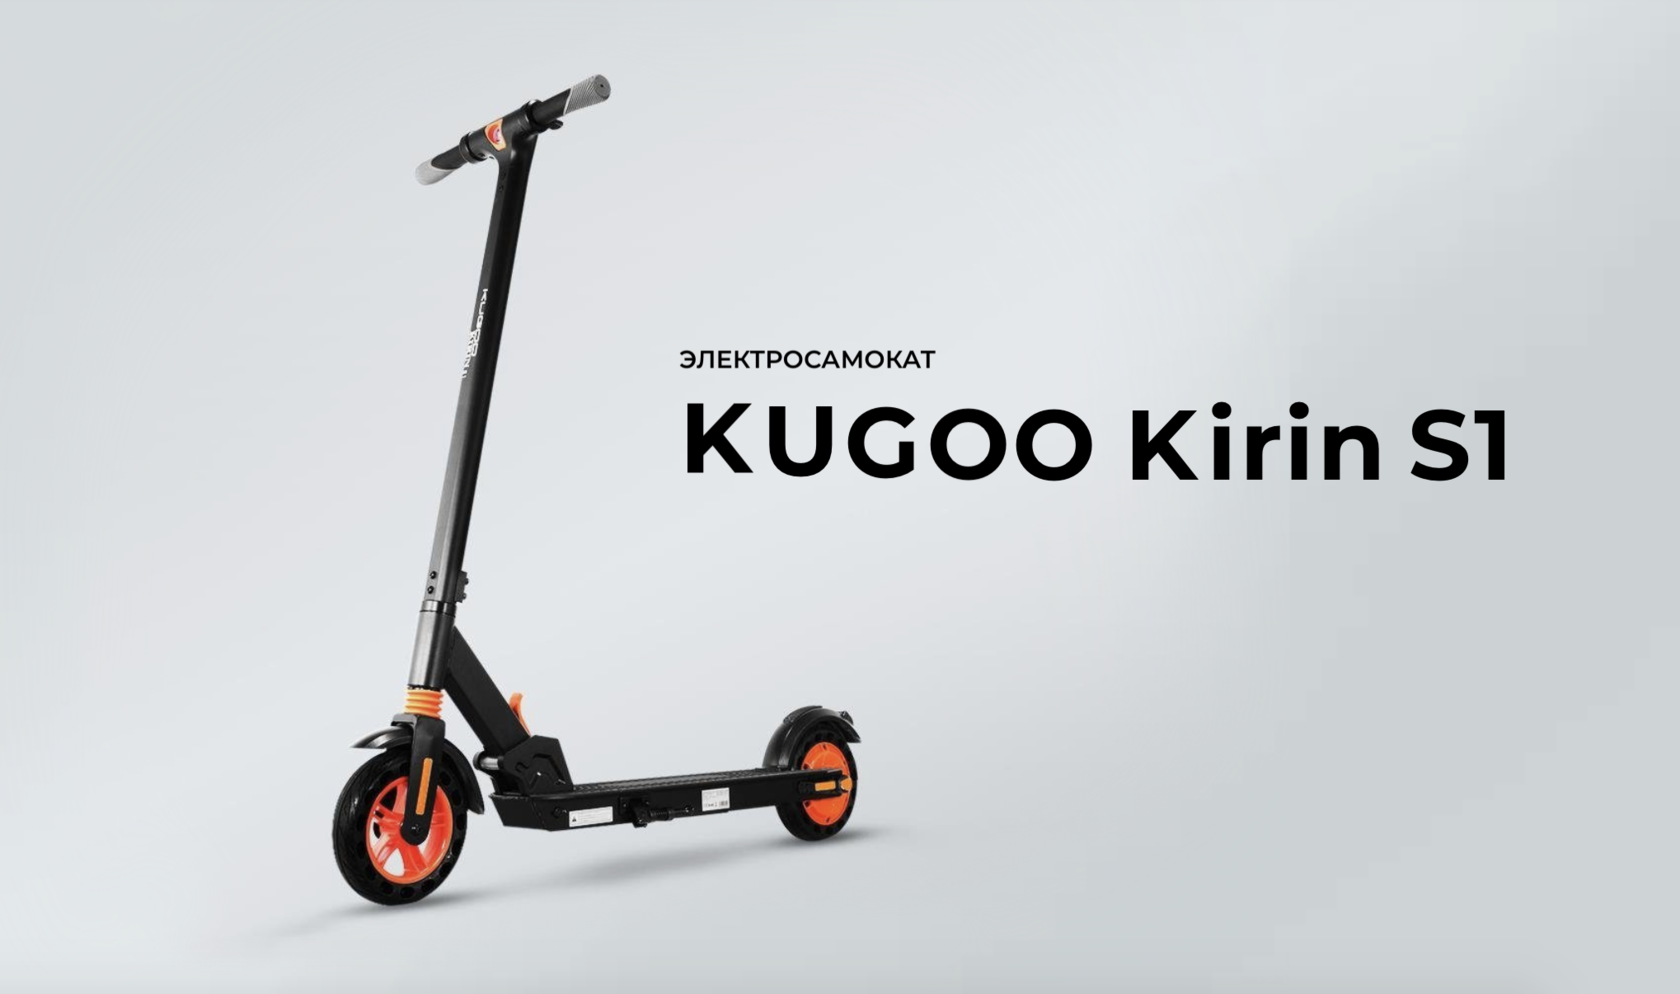 Kugoo kirin v3 pro отзывы. Самокат Kugoo s1. Электросамокат Kugoo Kirin s1 Pro. Kugoo s1 Plus. Электросамокат Kugoo Kirin s2 Pro.